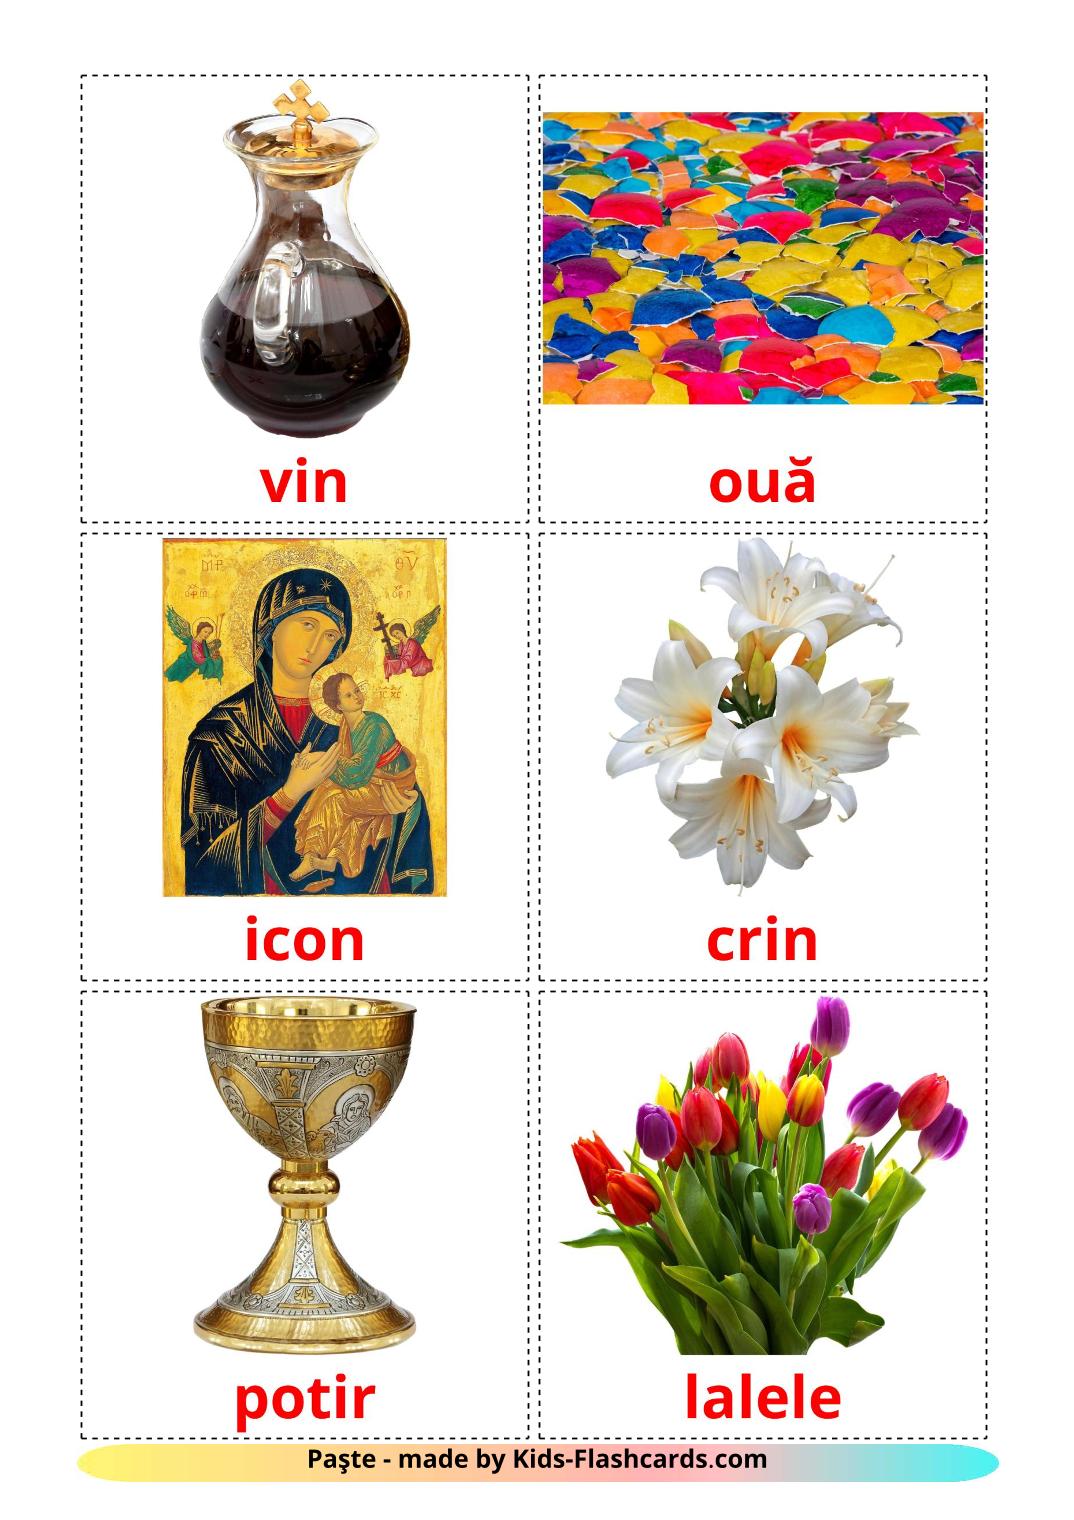 Pasqua - 31 flashcards rumeno stampabili gratuitamente